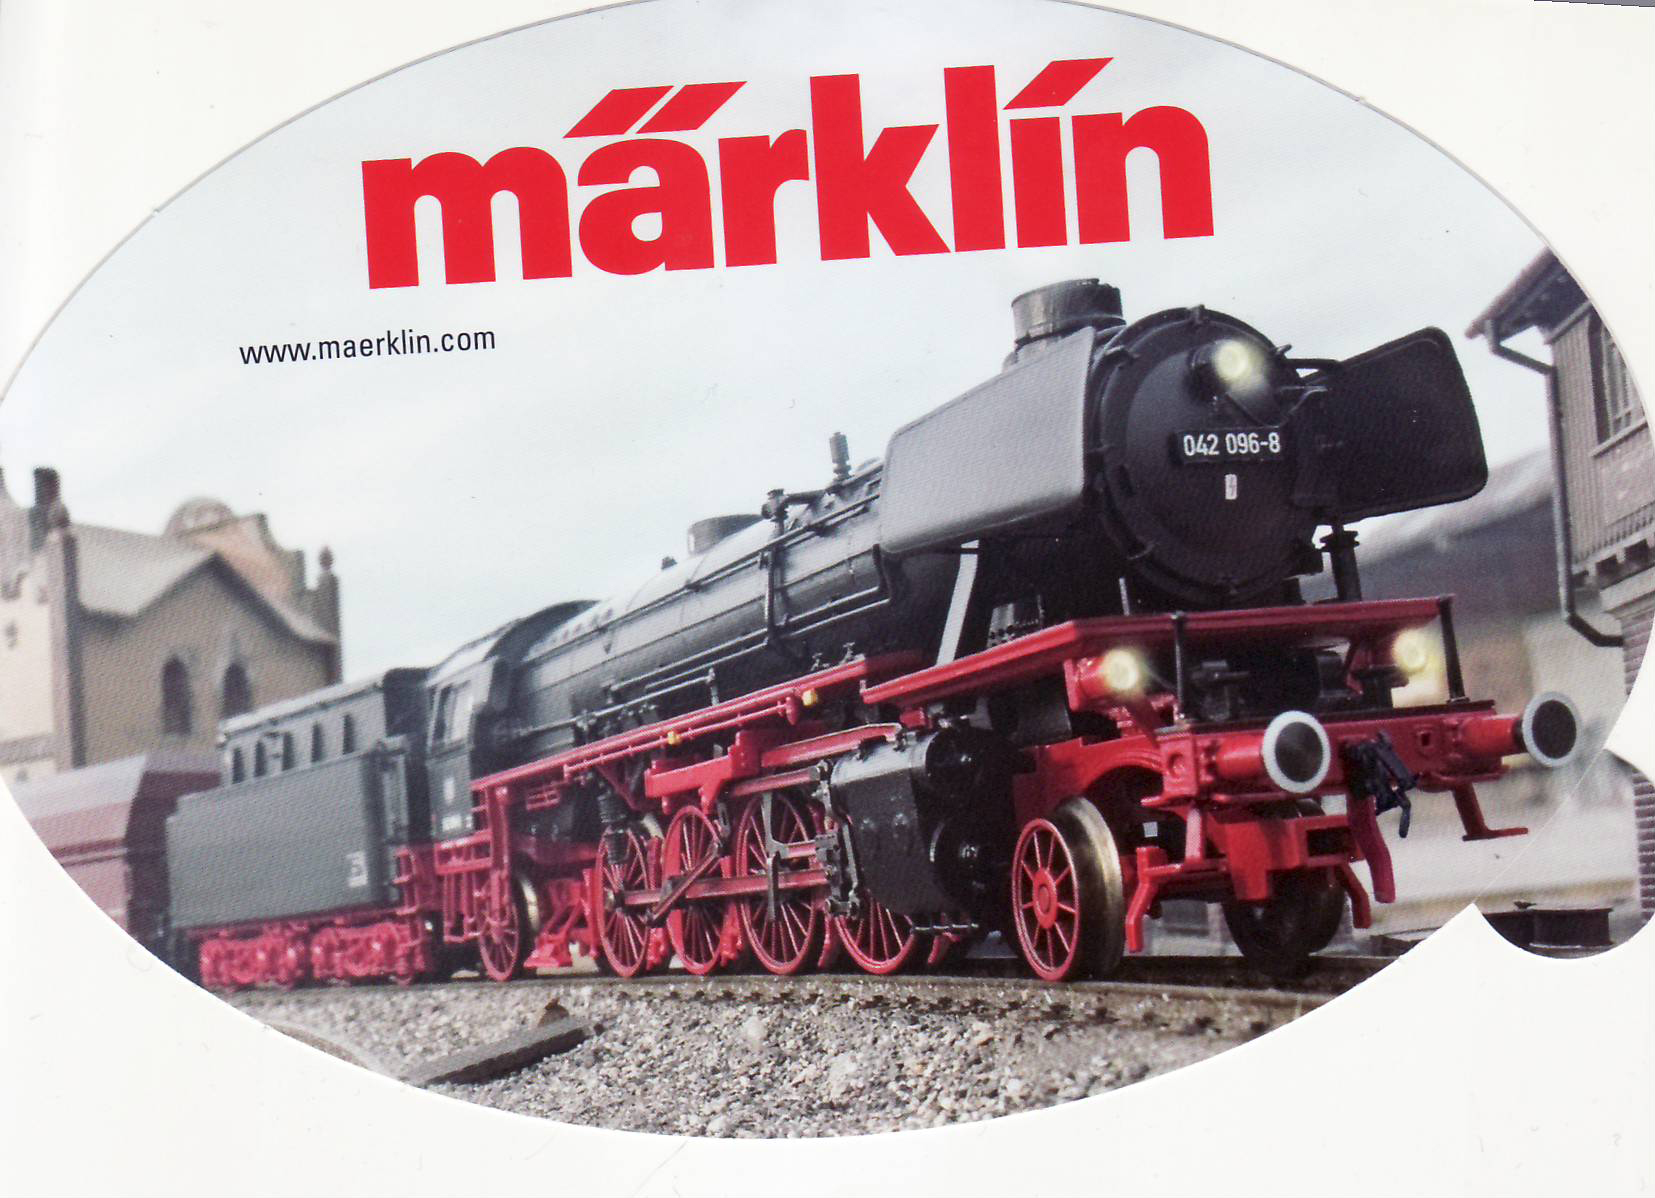 Sticker Marklin - ST033 - Modeltreinshop